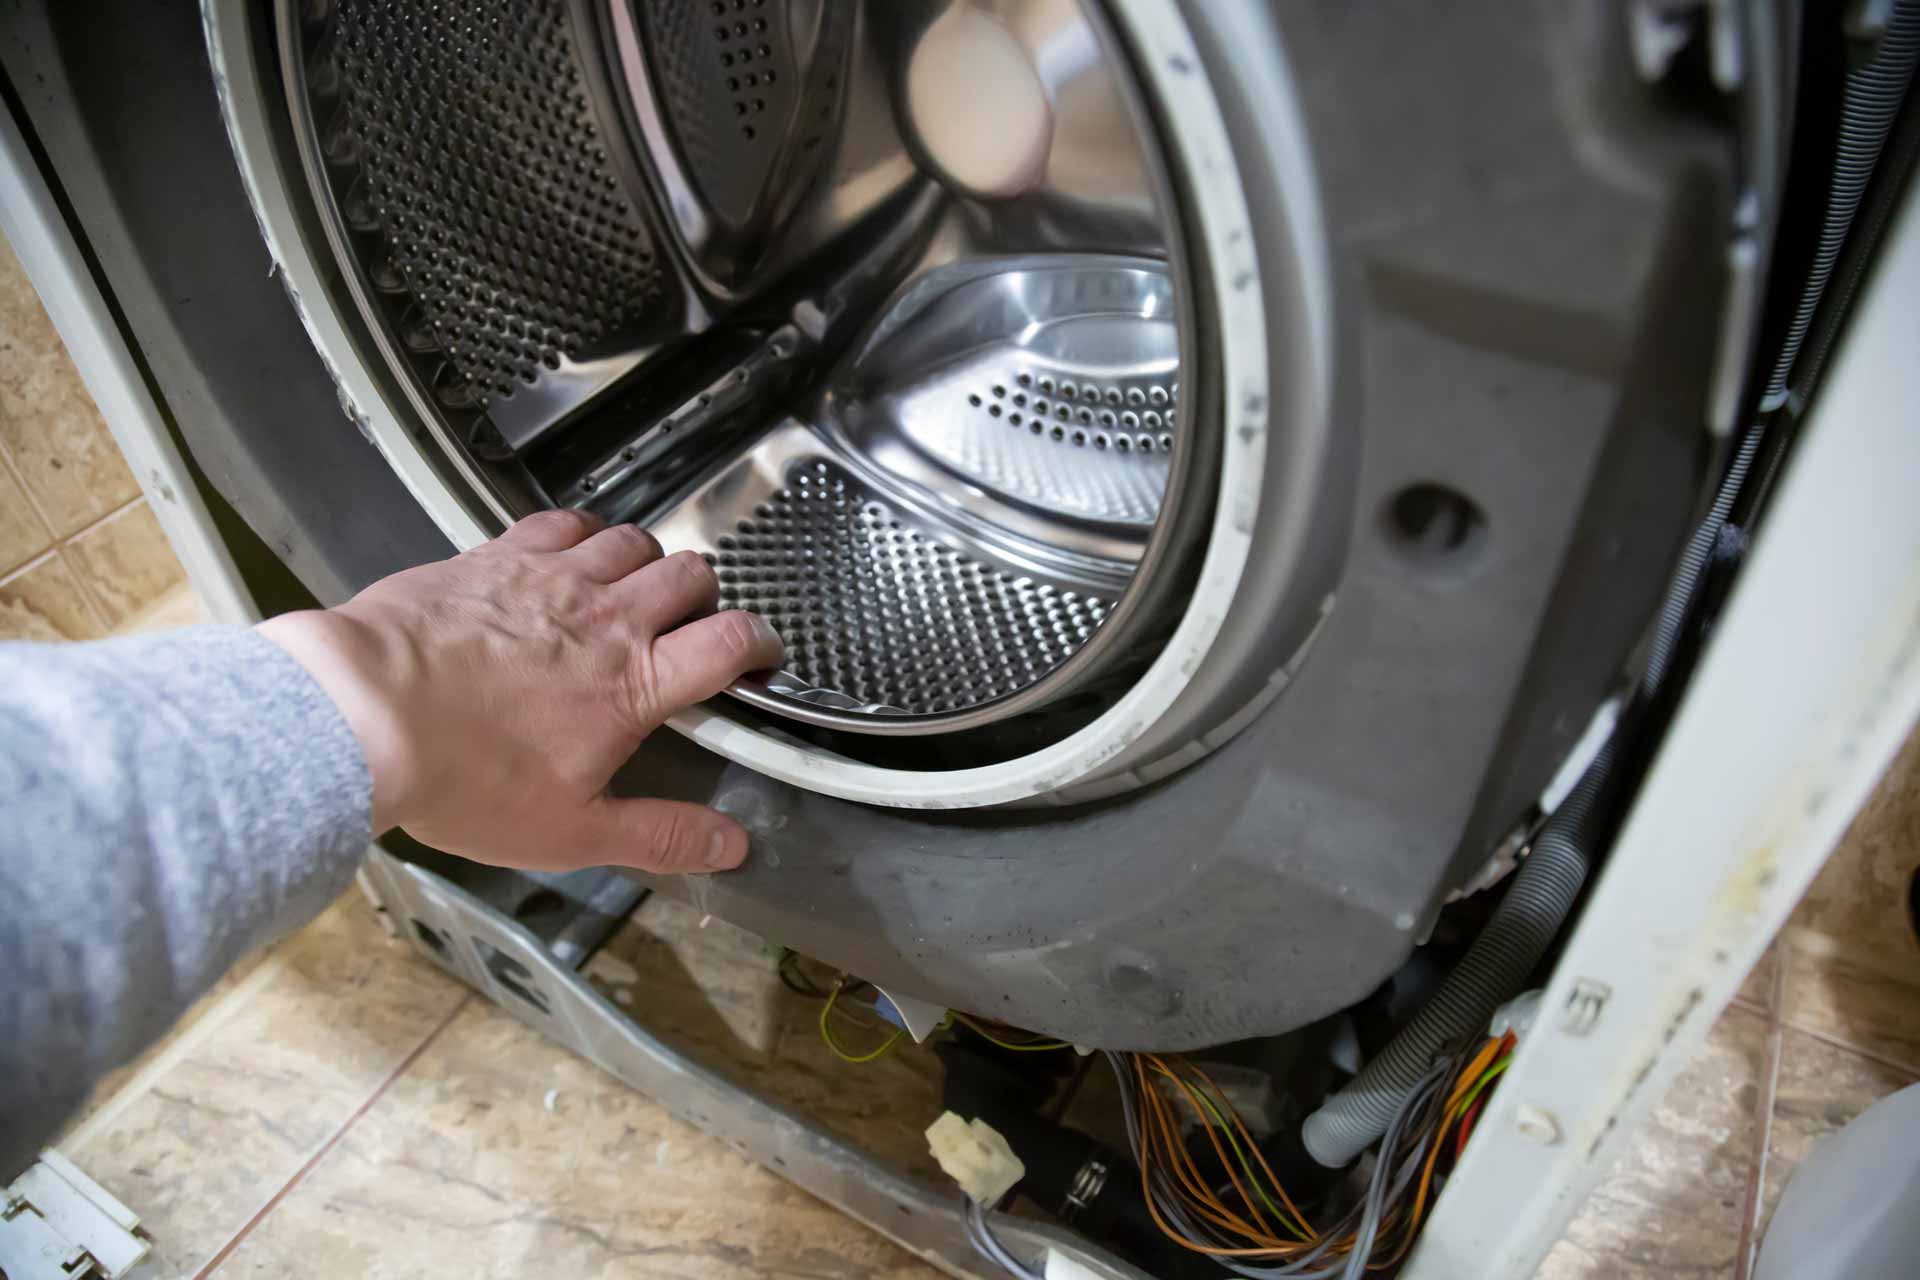 Appliance repair technician repairing a washing machine